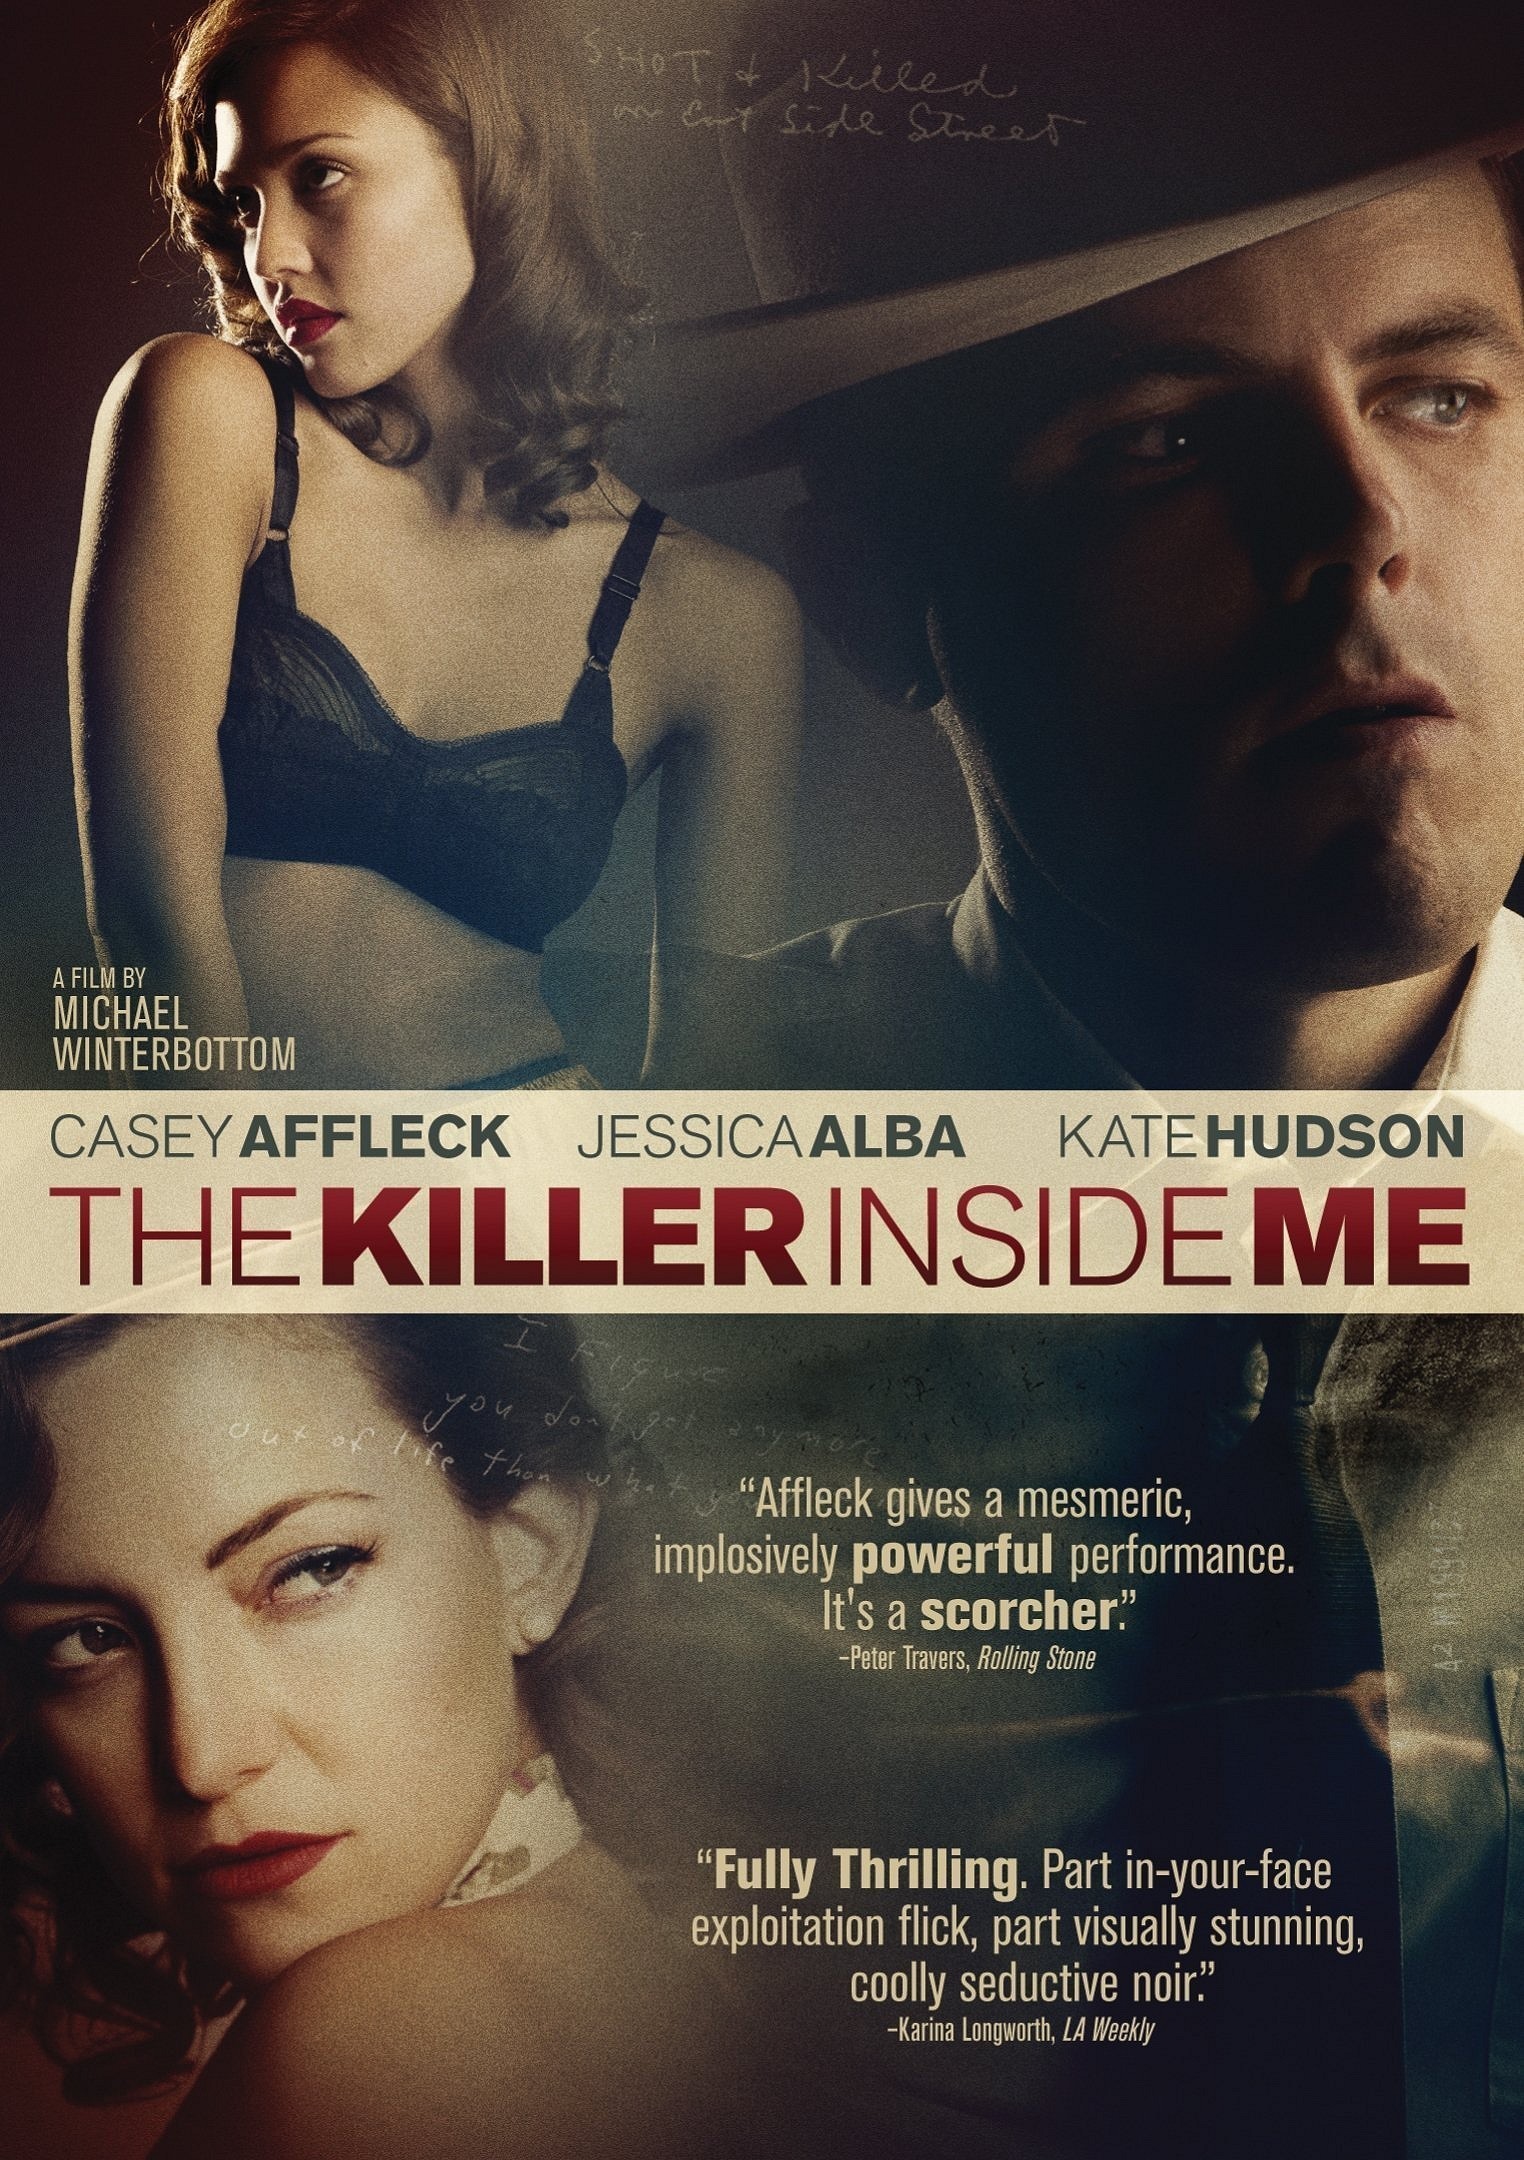 Poster for the movie "The Killer Inside Me"